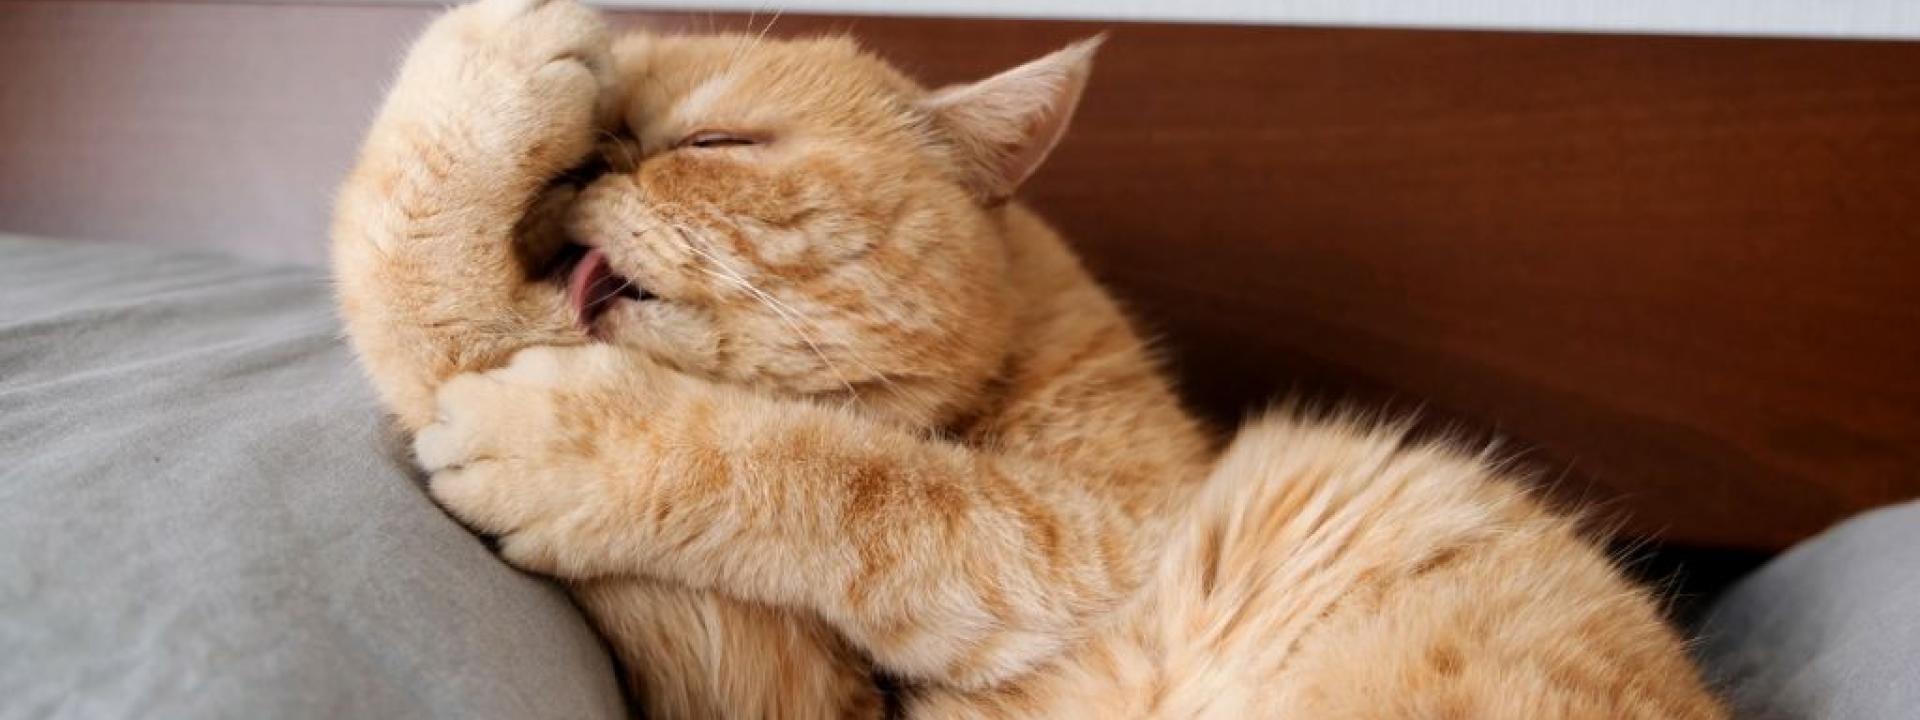 Orange cat grooming itself.